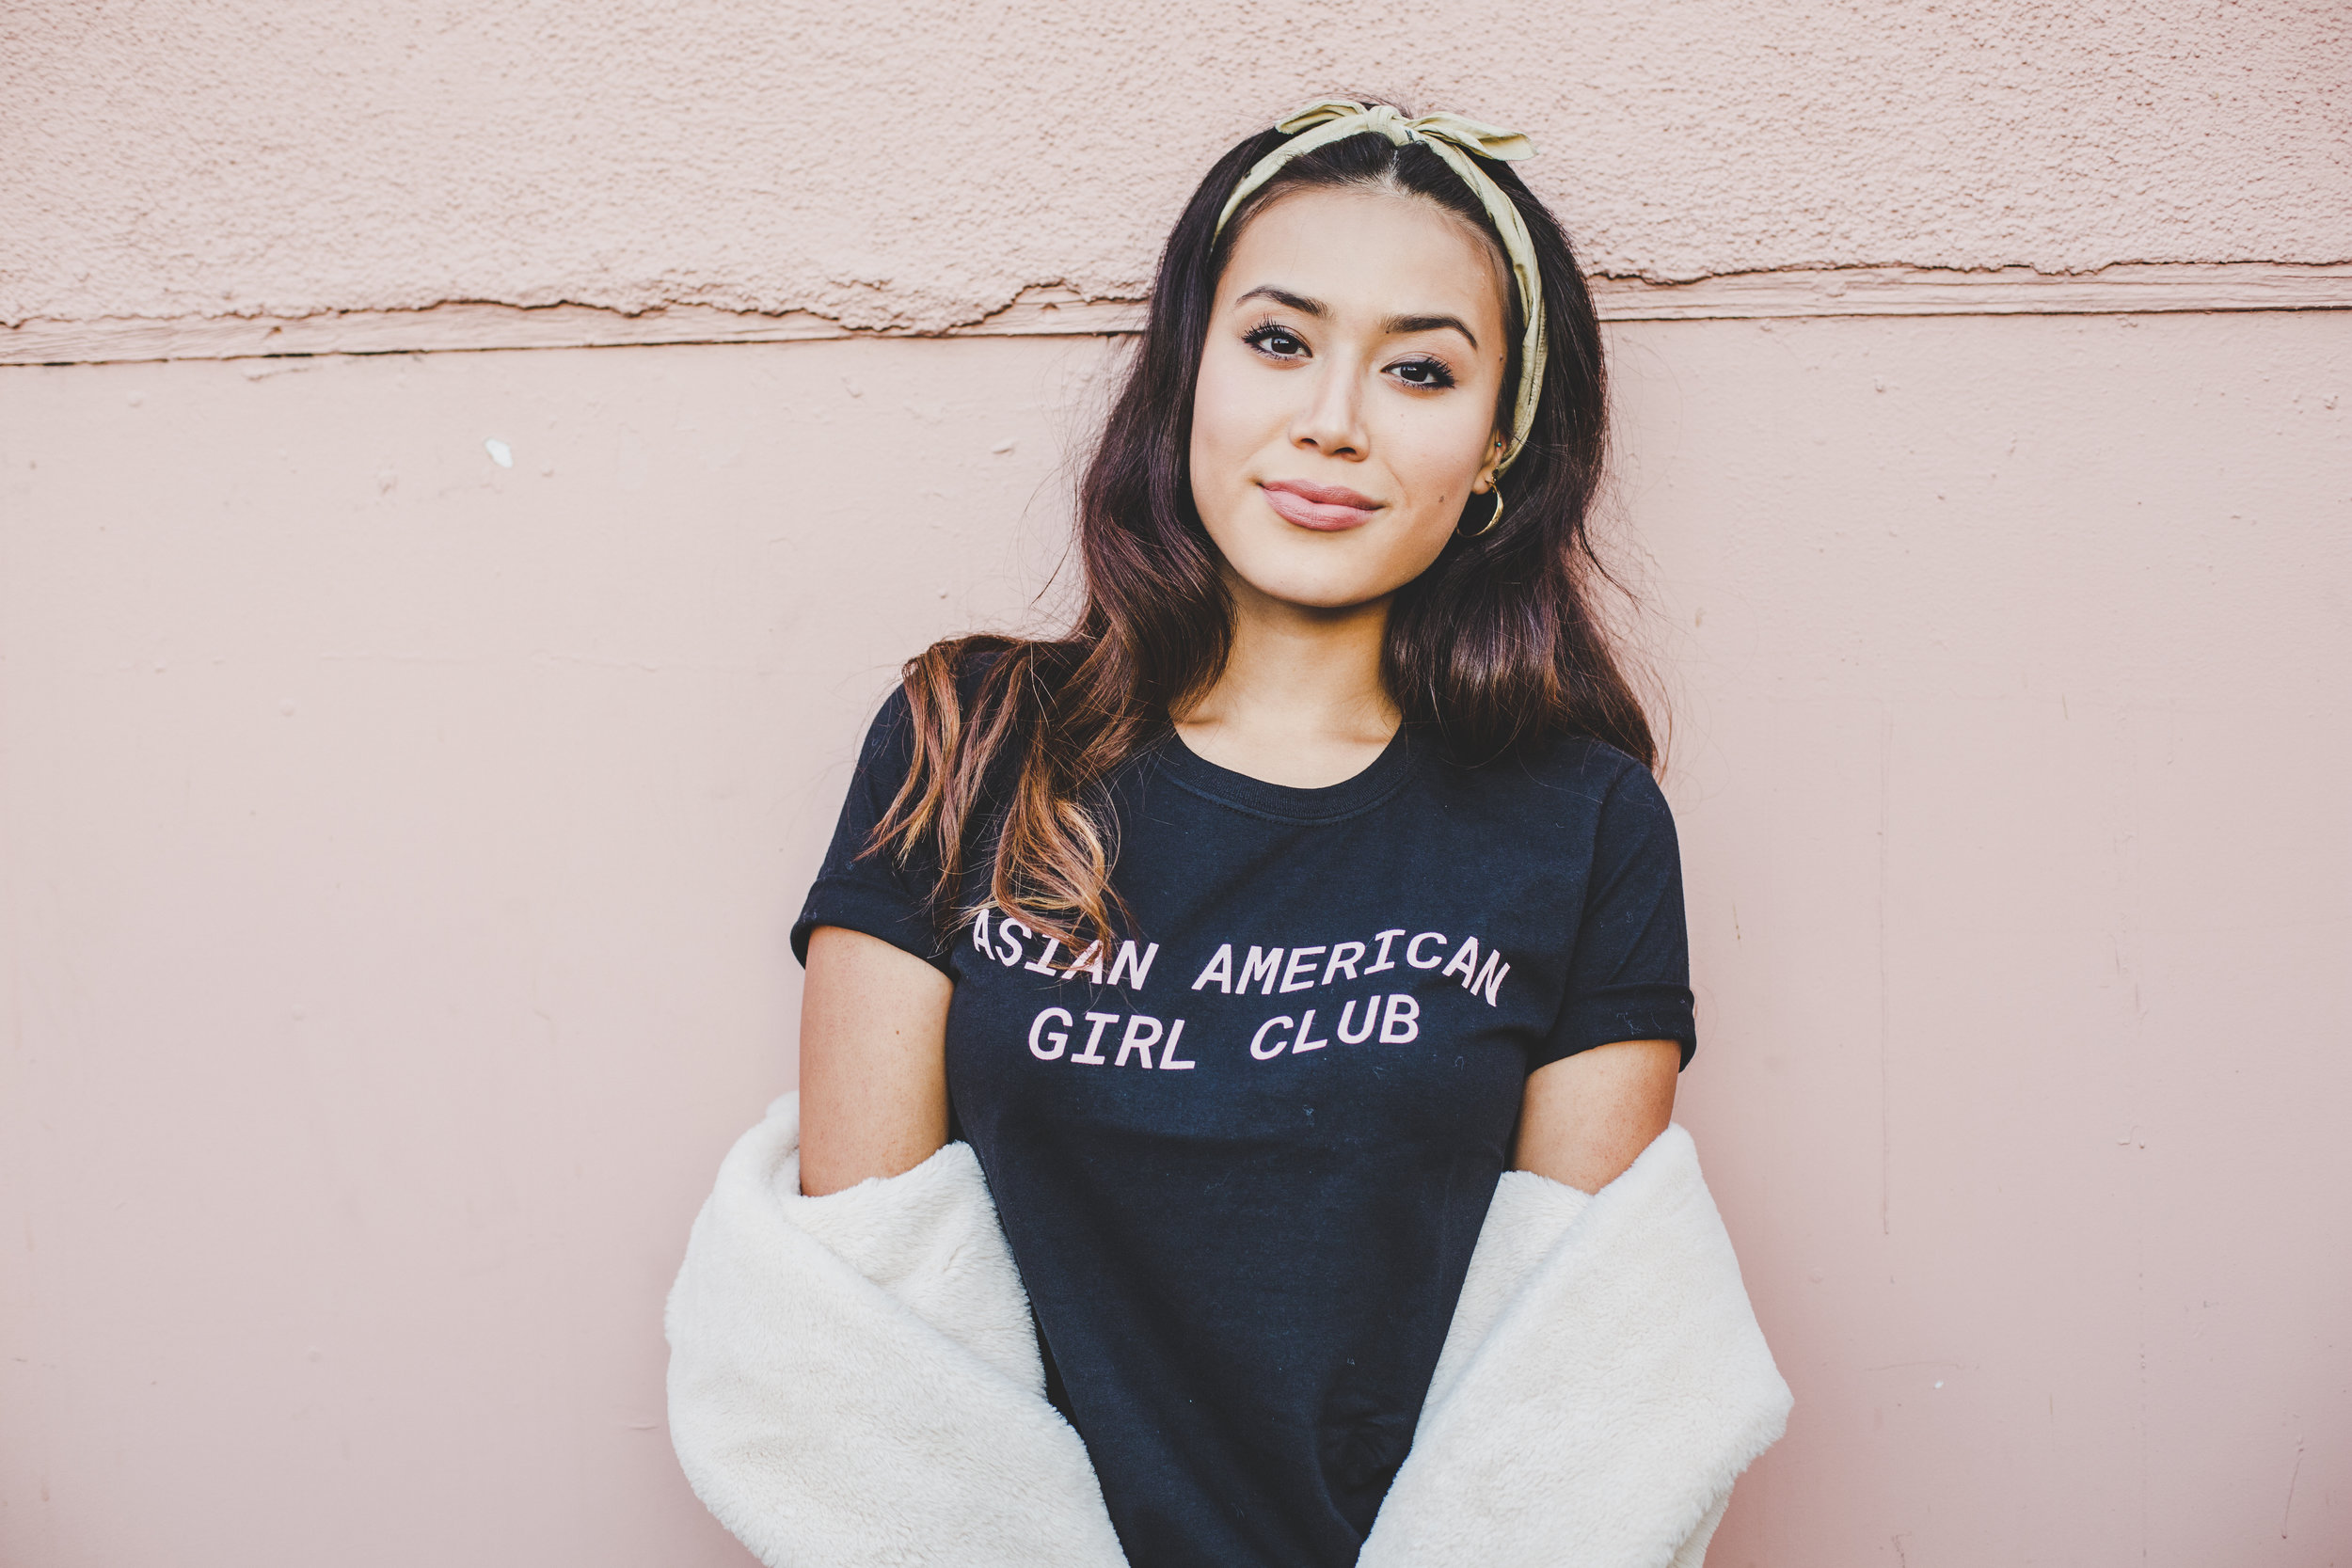 Asian American Girl